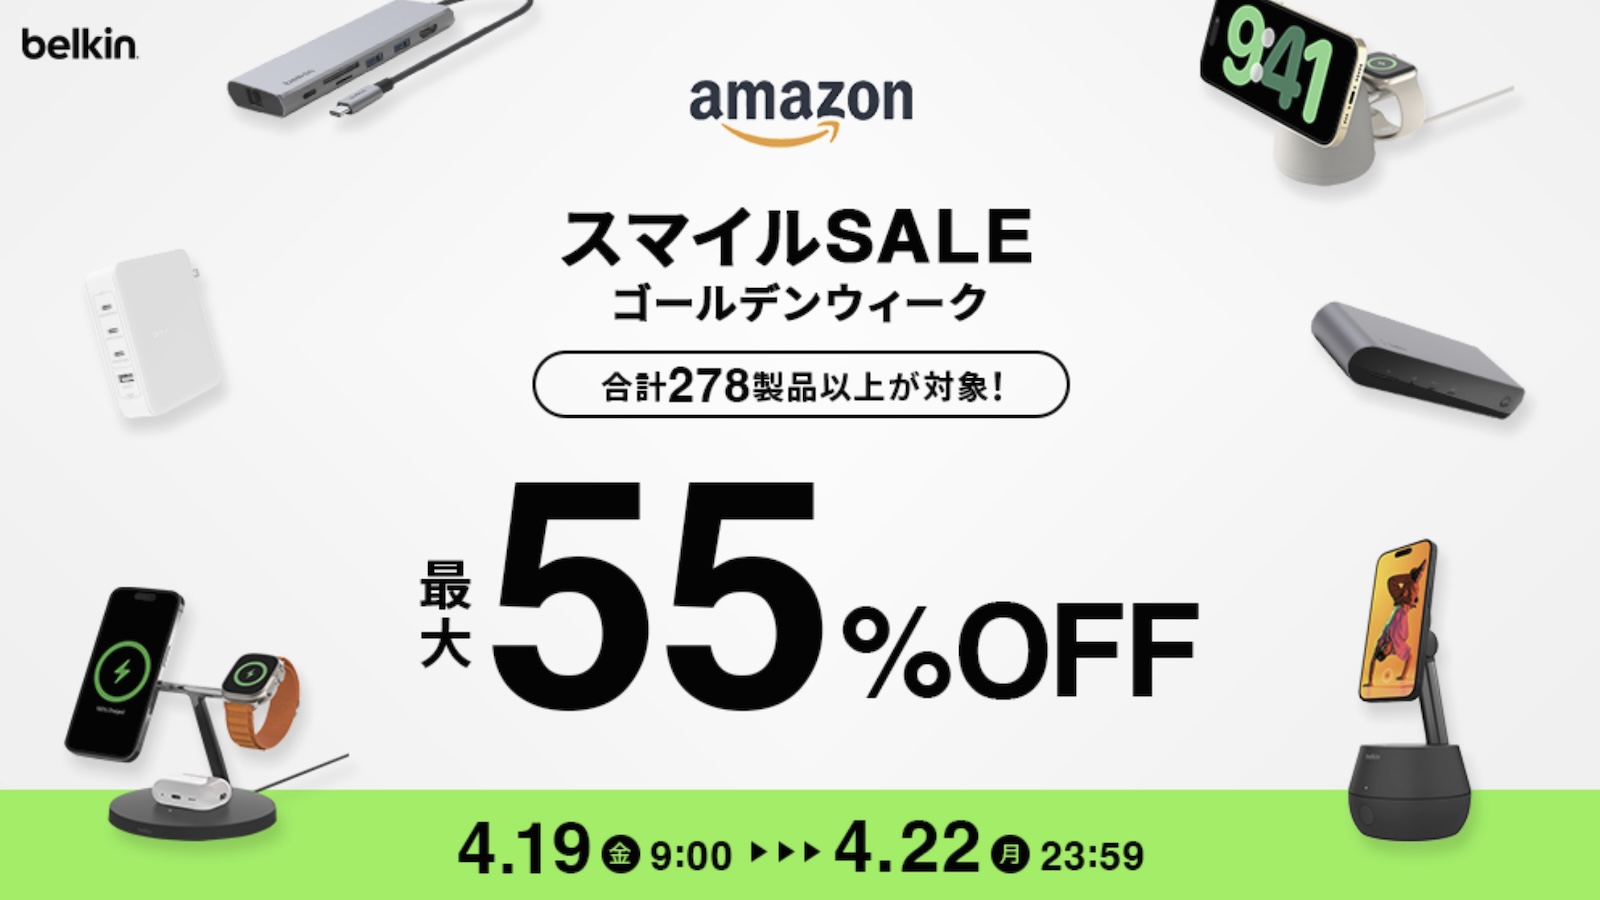 Amazon-Belkin-Smile-Sale.jpg